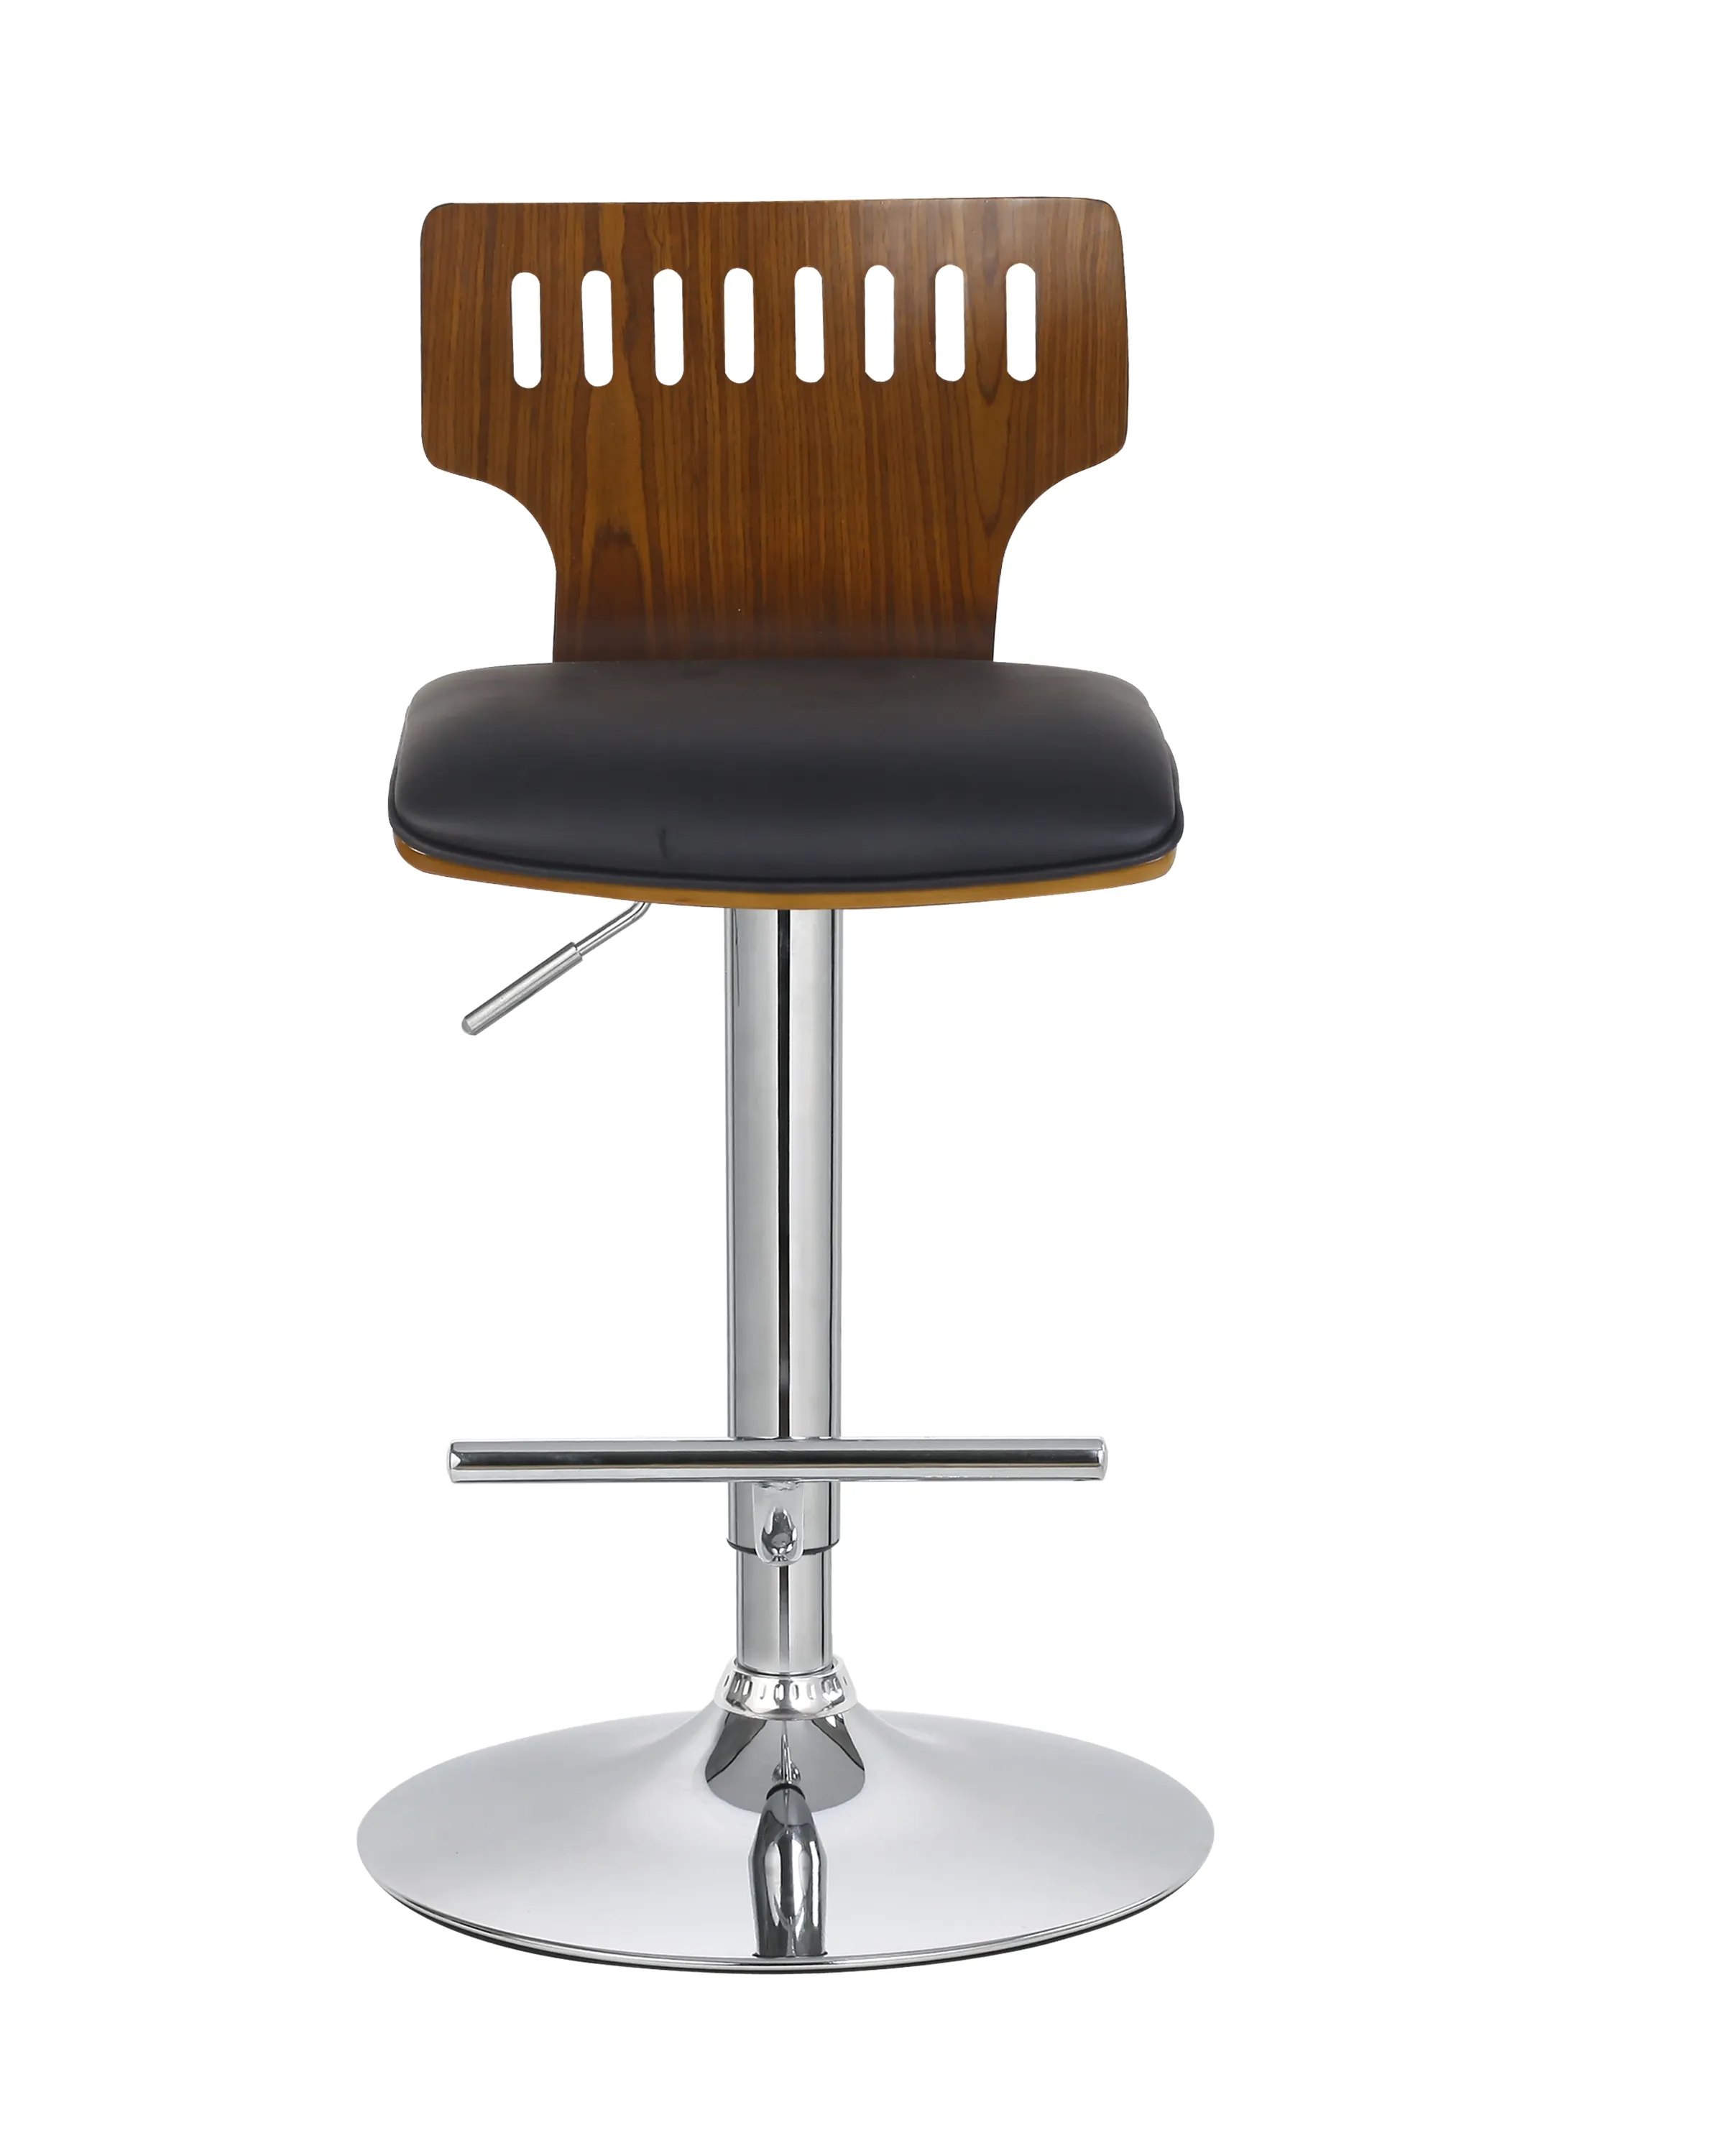 Hot sale Modern New Design Revolving High Bar Stool Bar Chair Chrome Gas Plated Luxury Curved Wood Bar Stool Chair